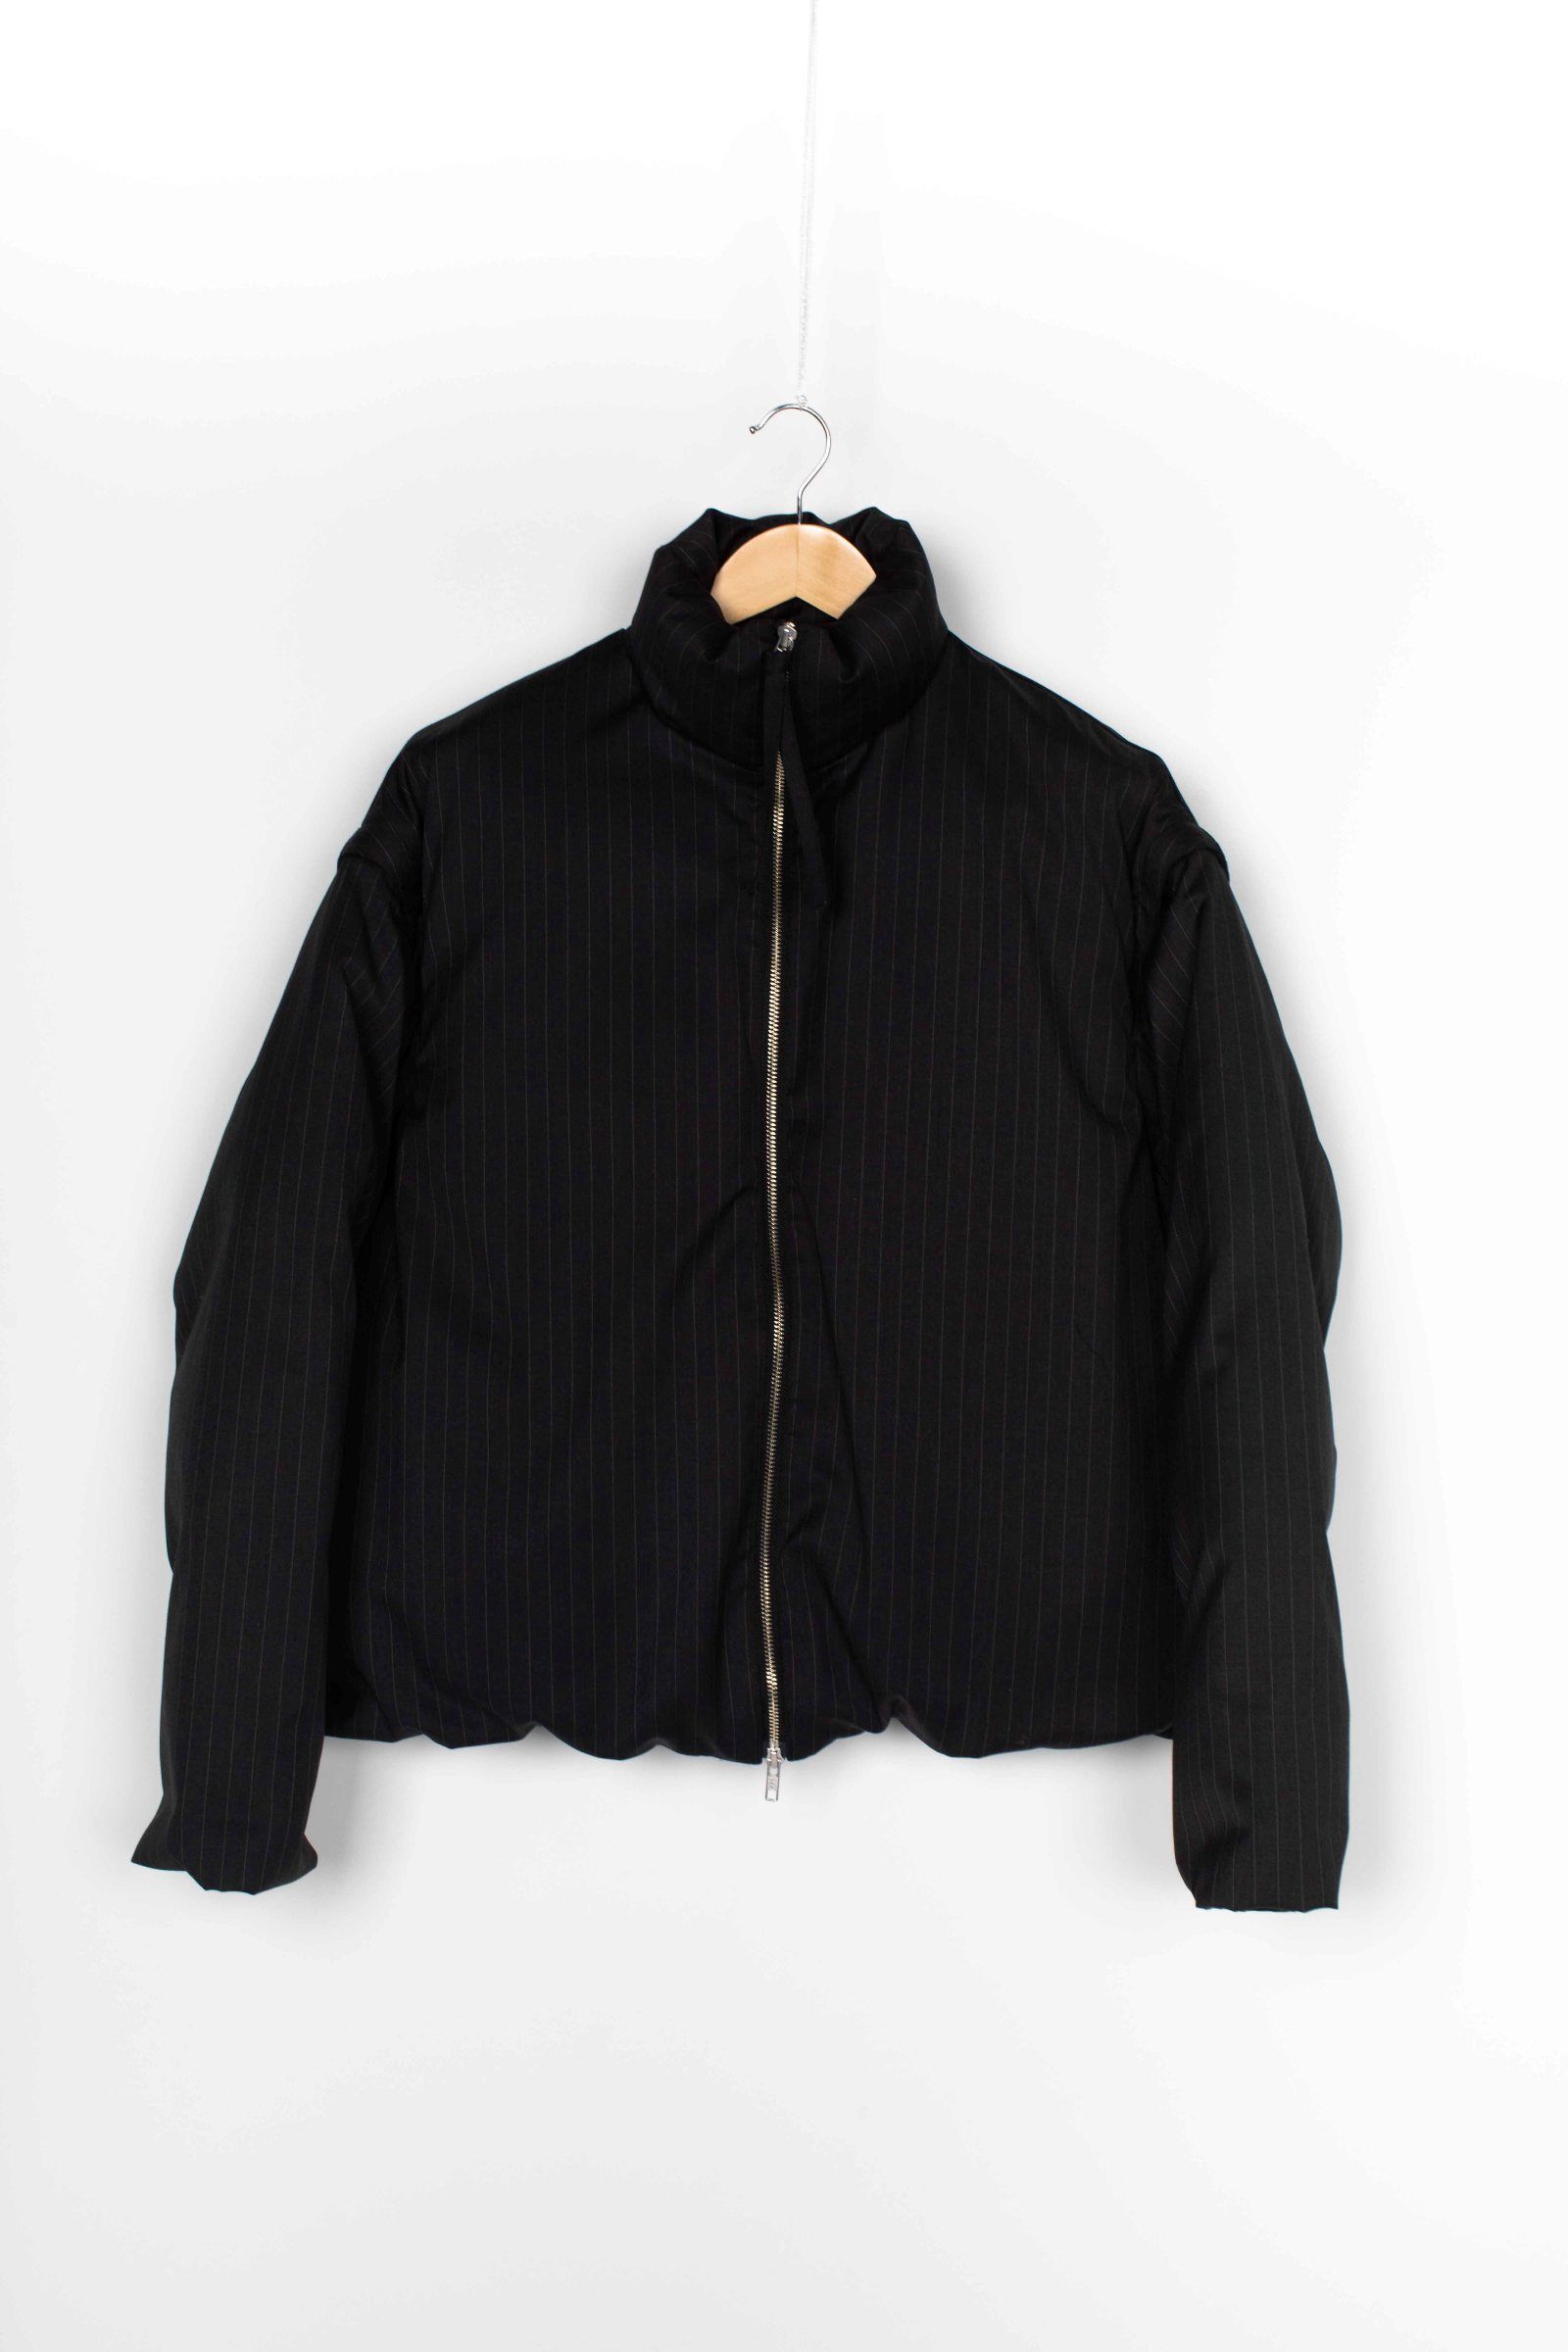 SEEALL - 【先行予約】minimal down jacket-grey stripe-22aw-9月